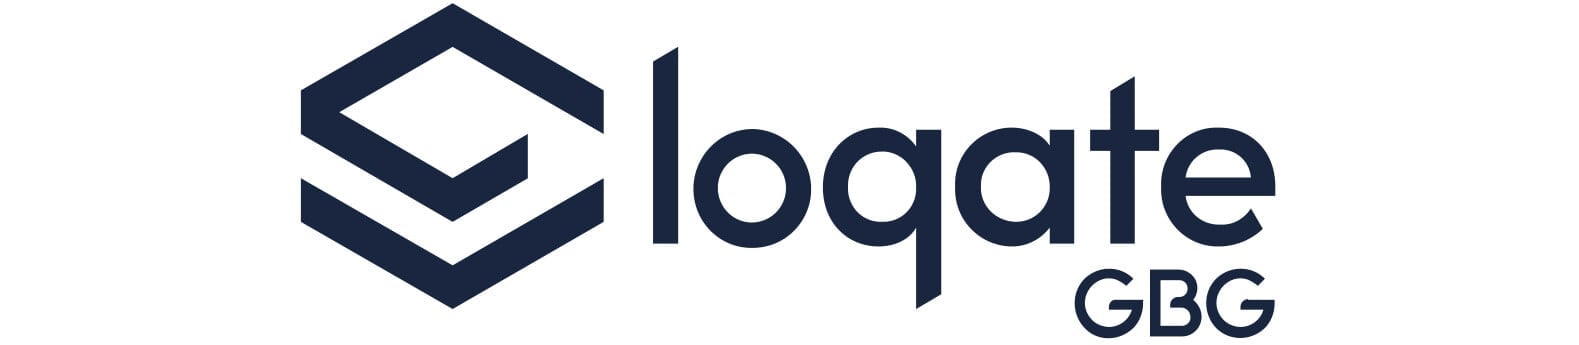 Loqate logo - Portal Integration